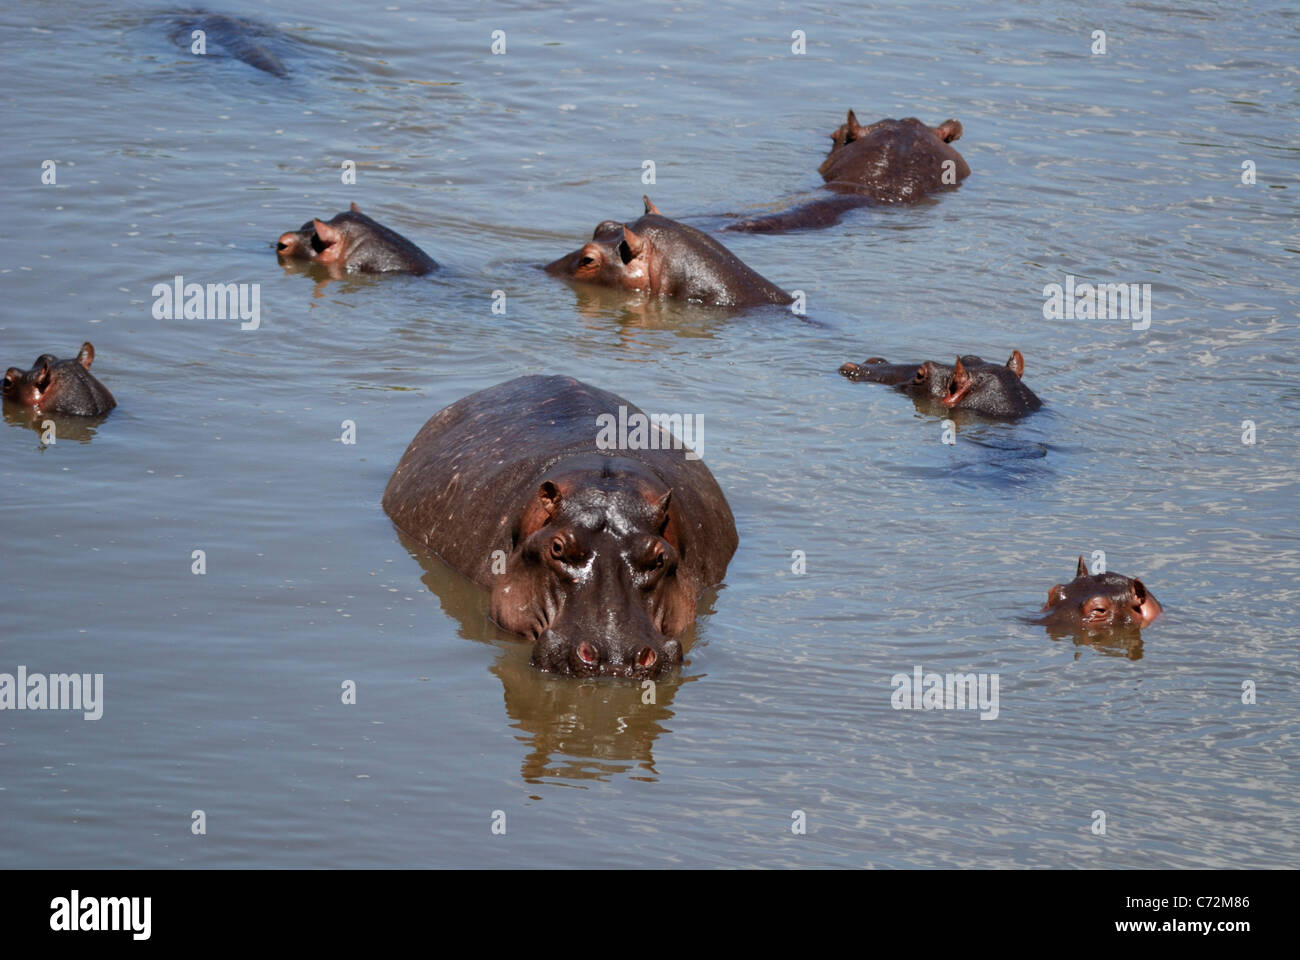 Common hippopotamus (Hippopotamus amphibius), Masai Mara National Reserve, Kenya Stock Photo